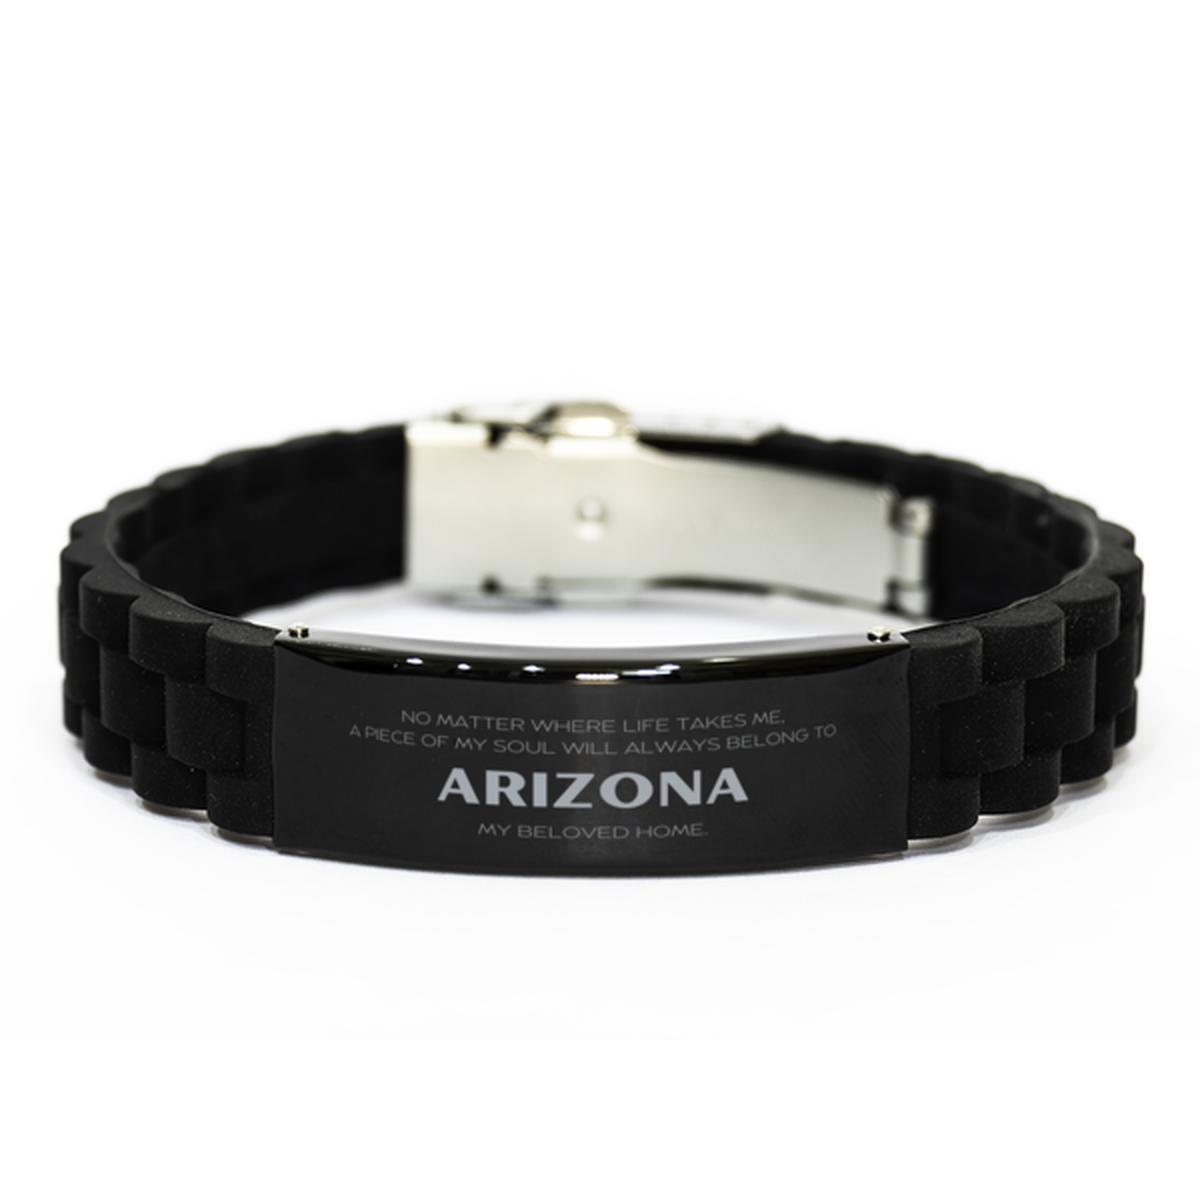 Love Arizona State Gifts, My soul will always belong to Arizona, Proud Black Glidelock Clasp Bracelet, Birthday Unique Gifts For Arizona Men, Women, Friends